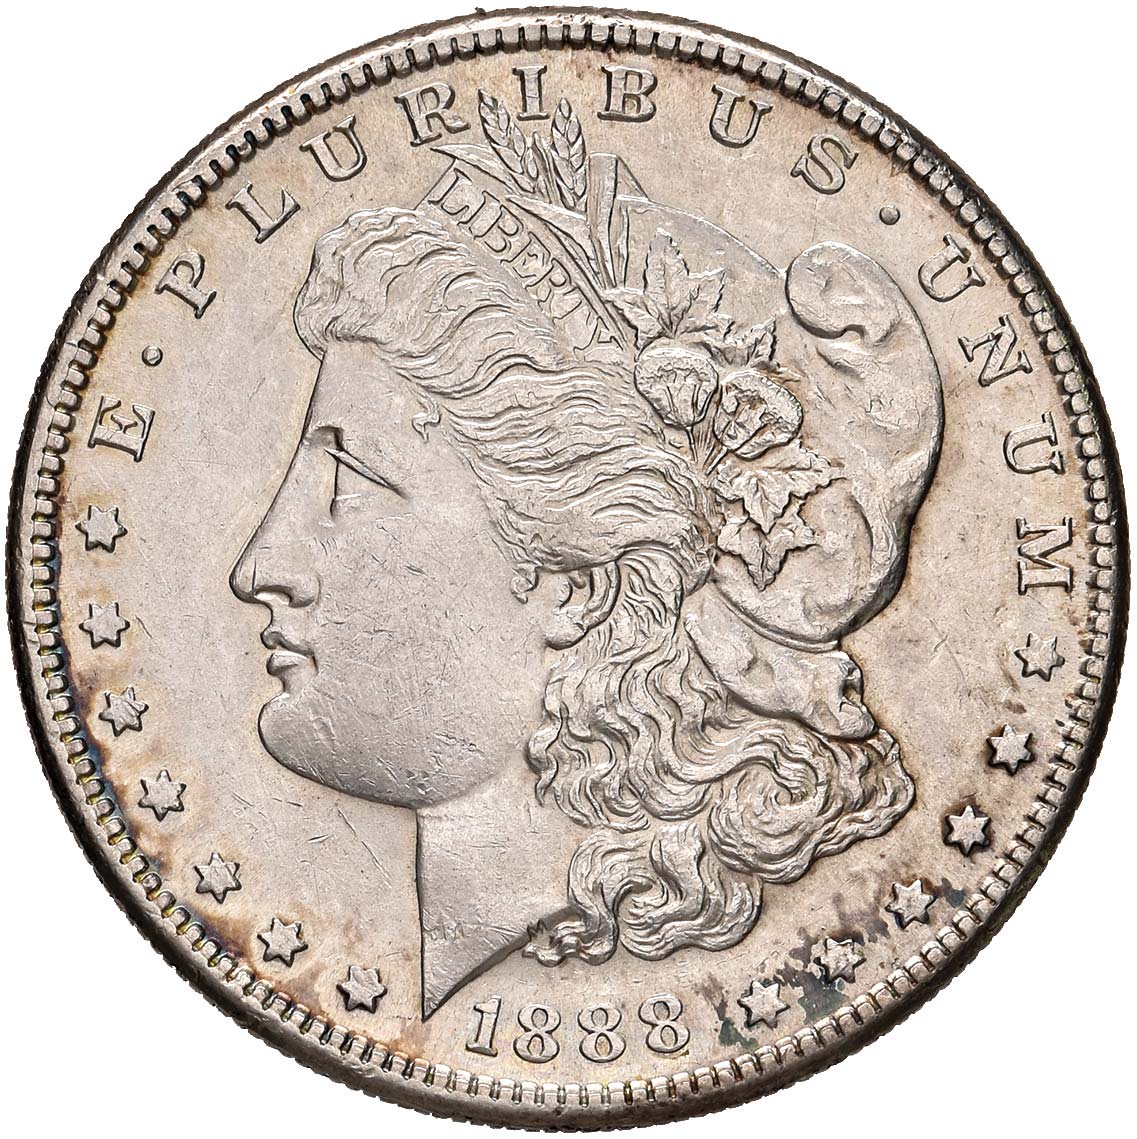 1 75 доллара. Монета 1 доллар 1881 года. 1 Доллар США 1888 пруф. 1 Доллар 1881 года PLURLBUS. Серебряный доллар 1881.